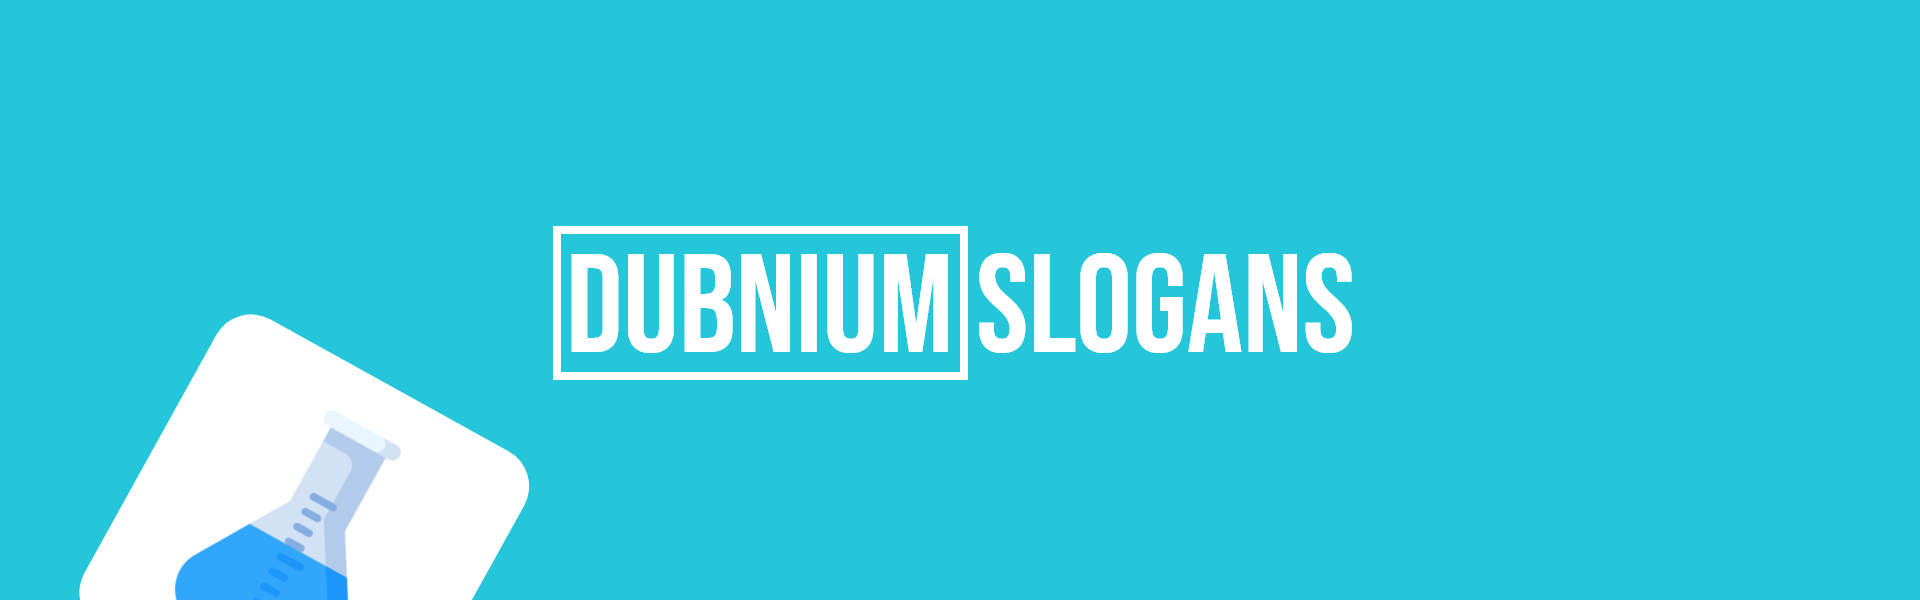 dubnium slogans taglines